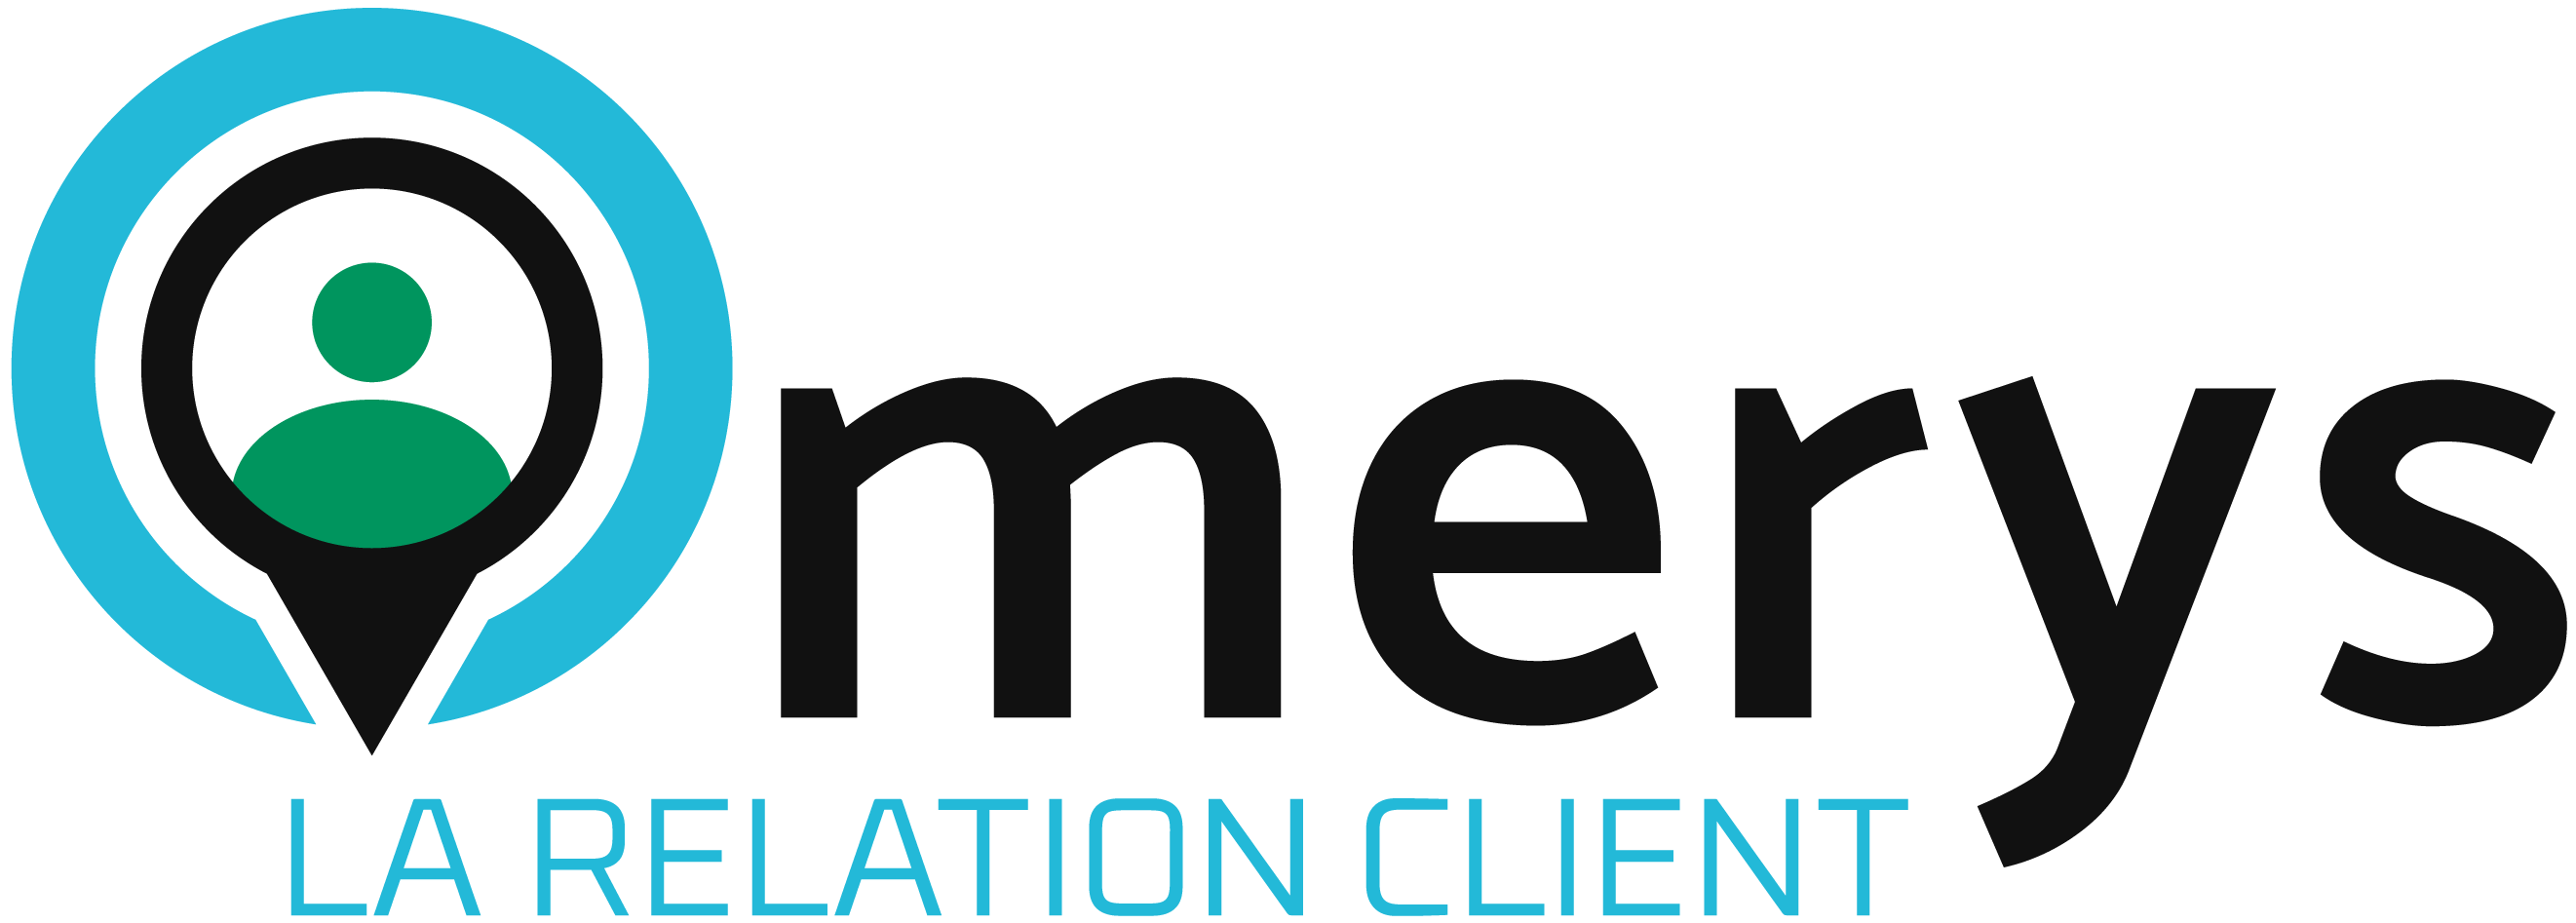 Omerys - La relation client